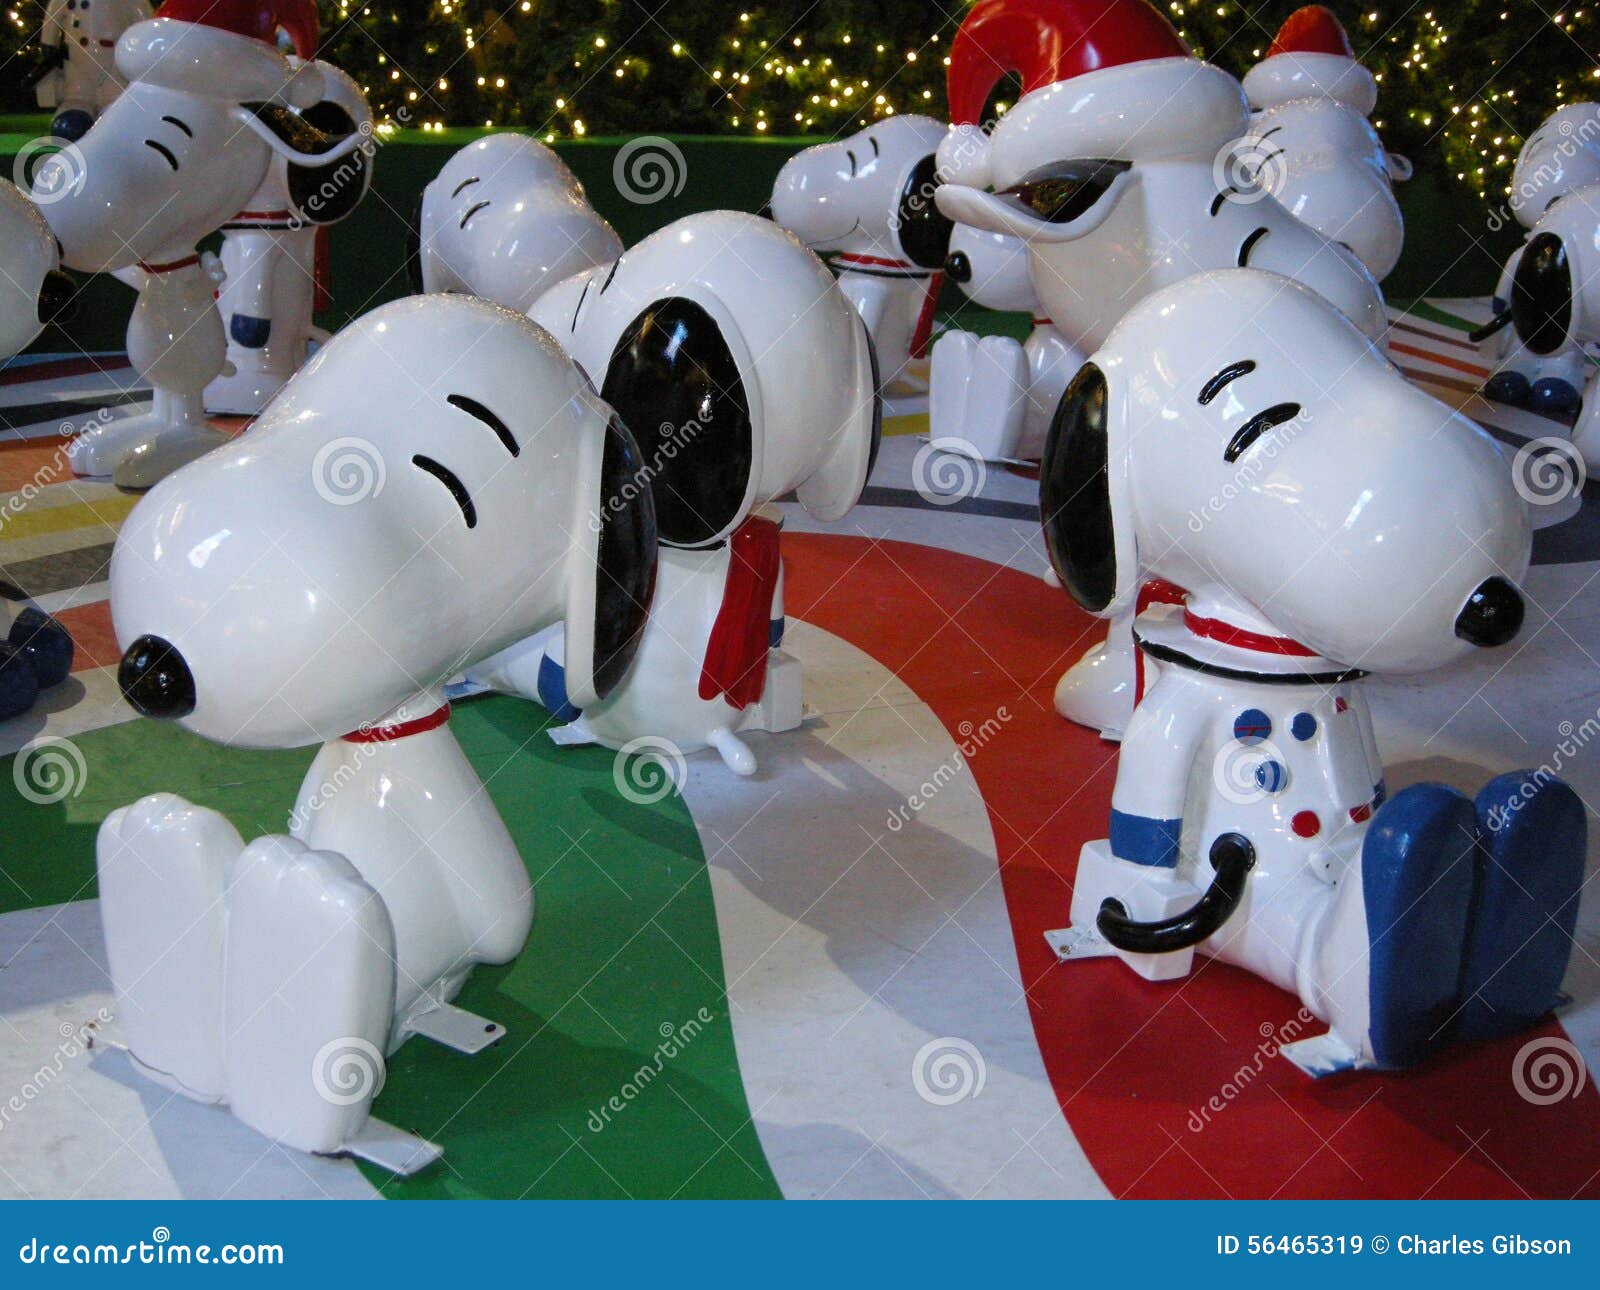 Snoopies editorial stock image. Image of season, pattaya - 56465319